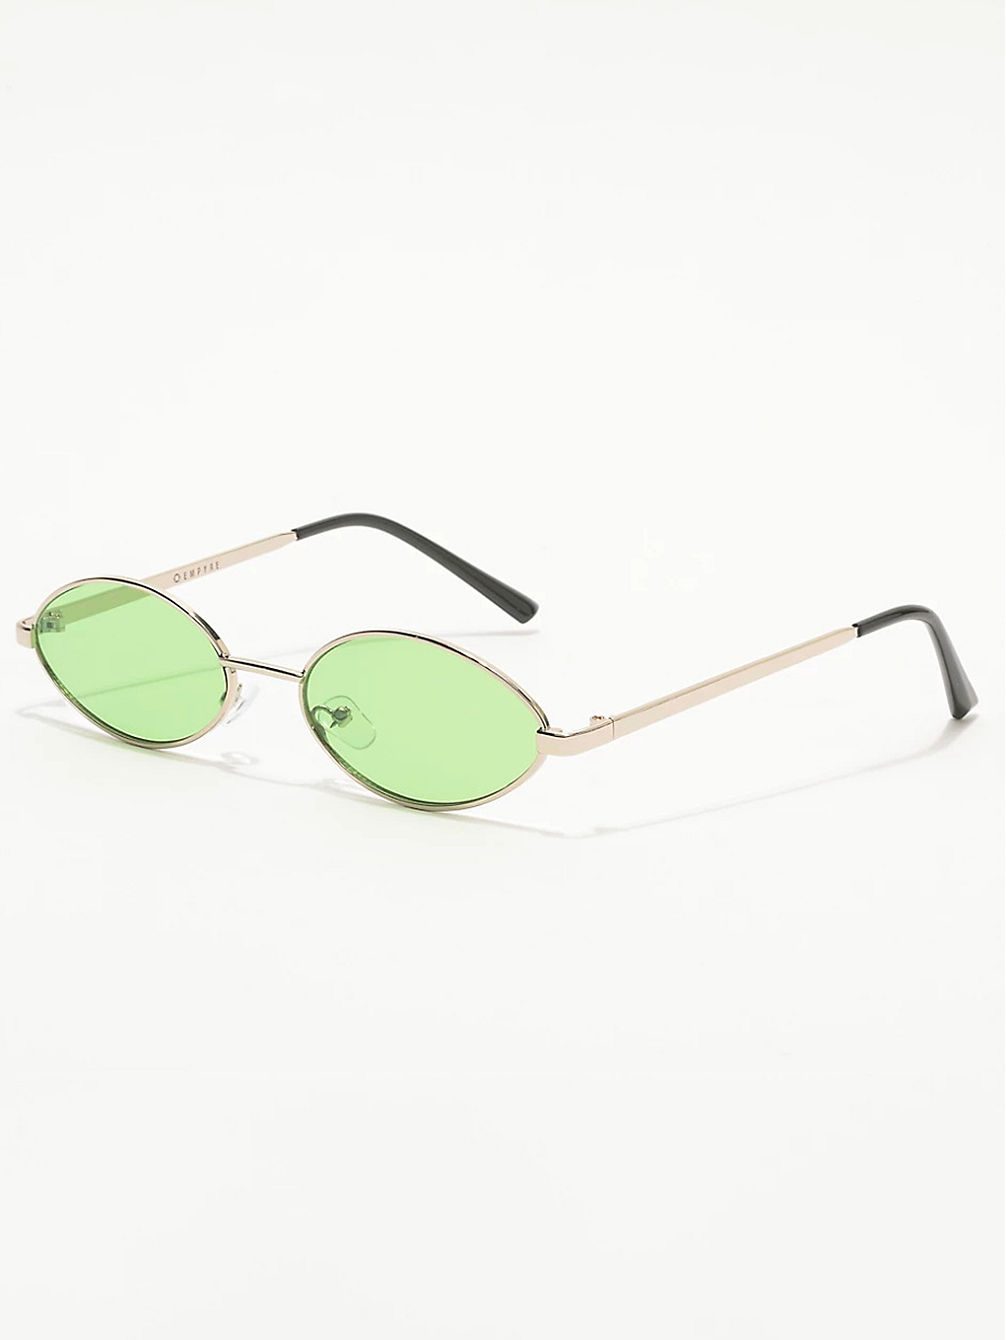 Miller Slim Round Green Sunglasses